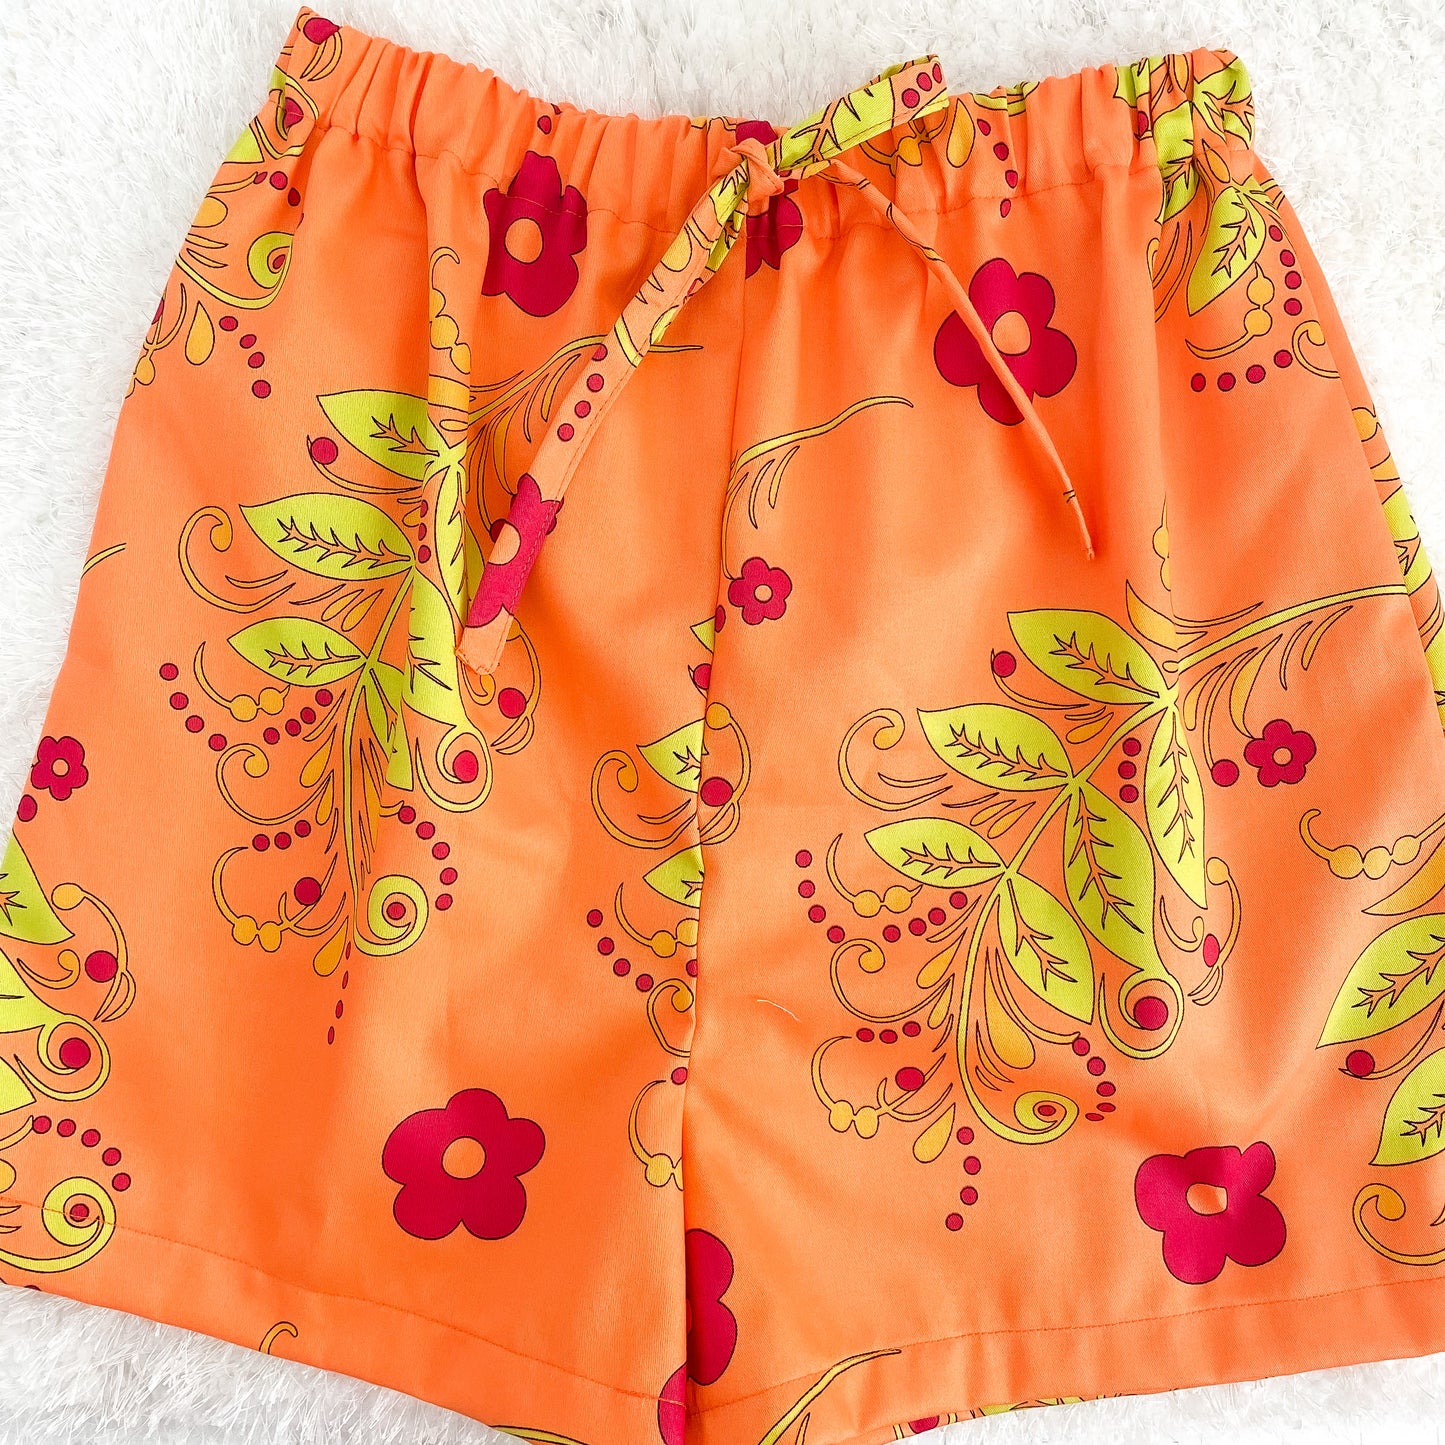 Apricot Shorts